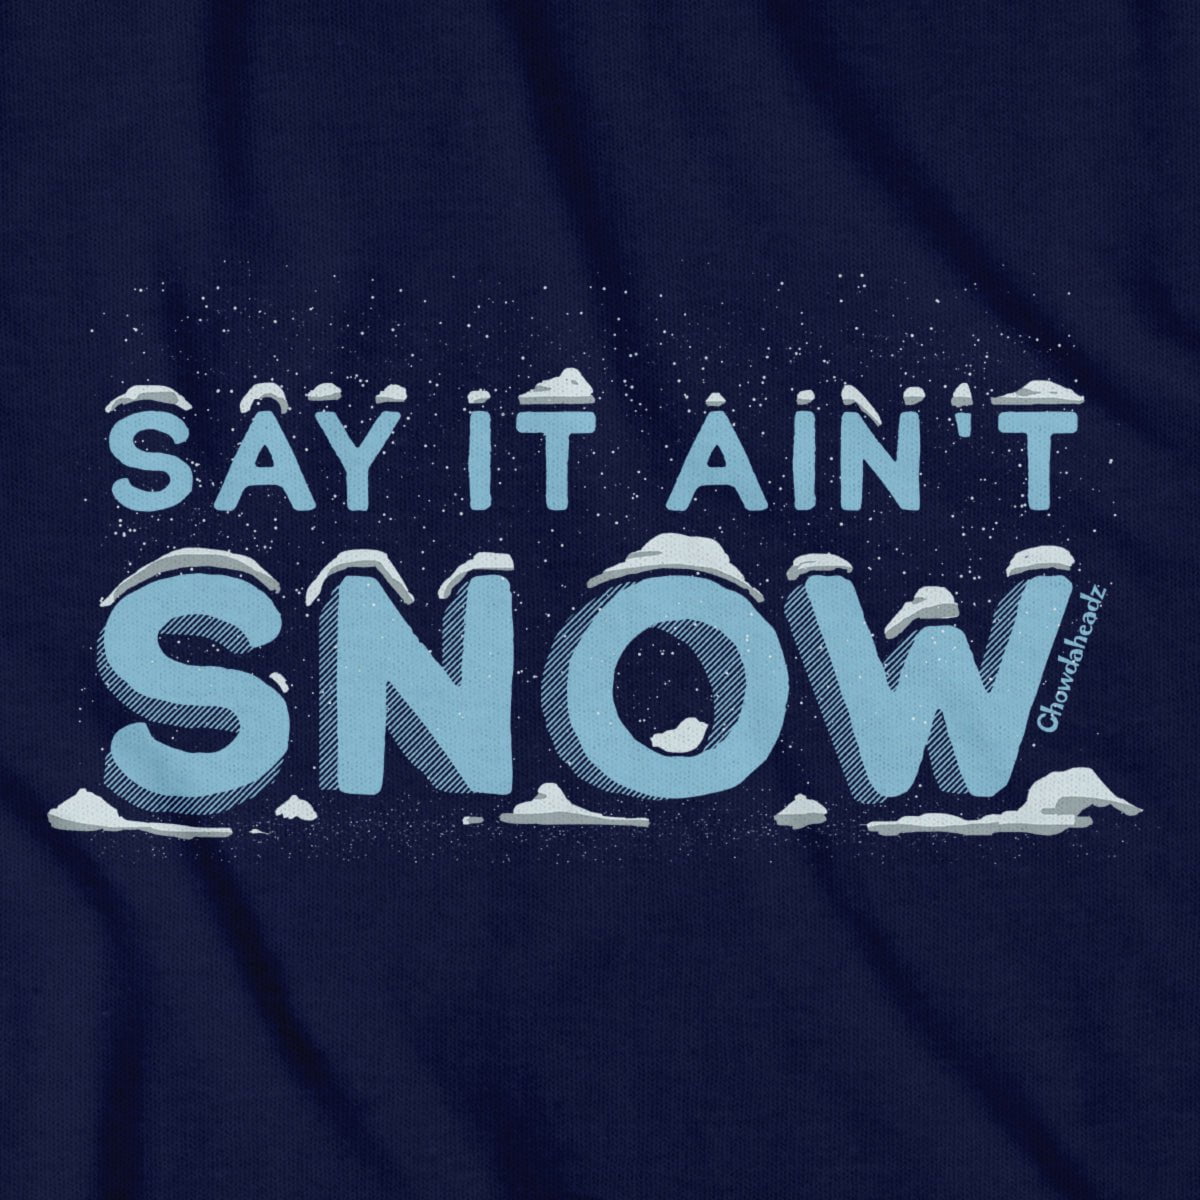 Say It Ain't Snow T-Shirt - Chowdaheadz